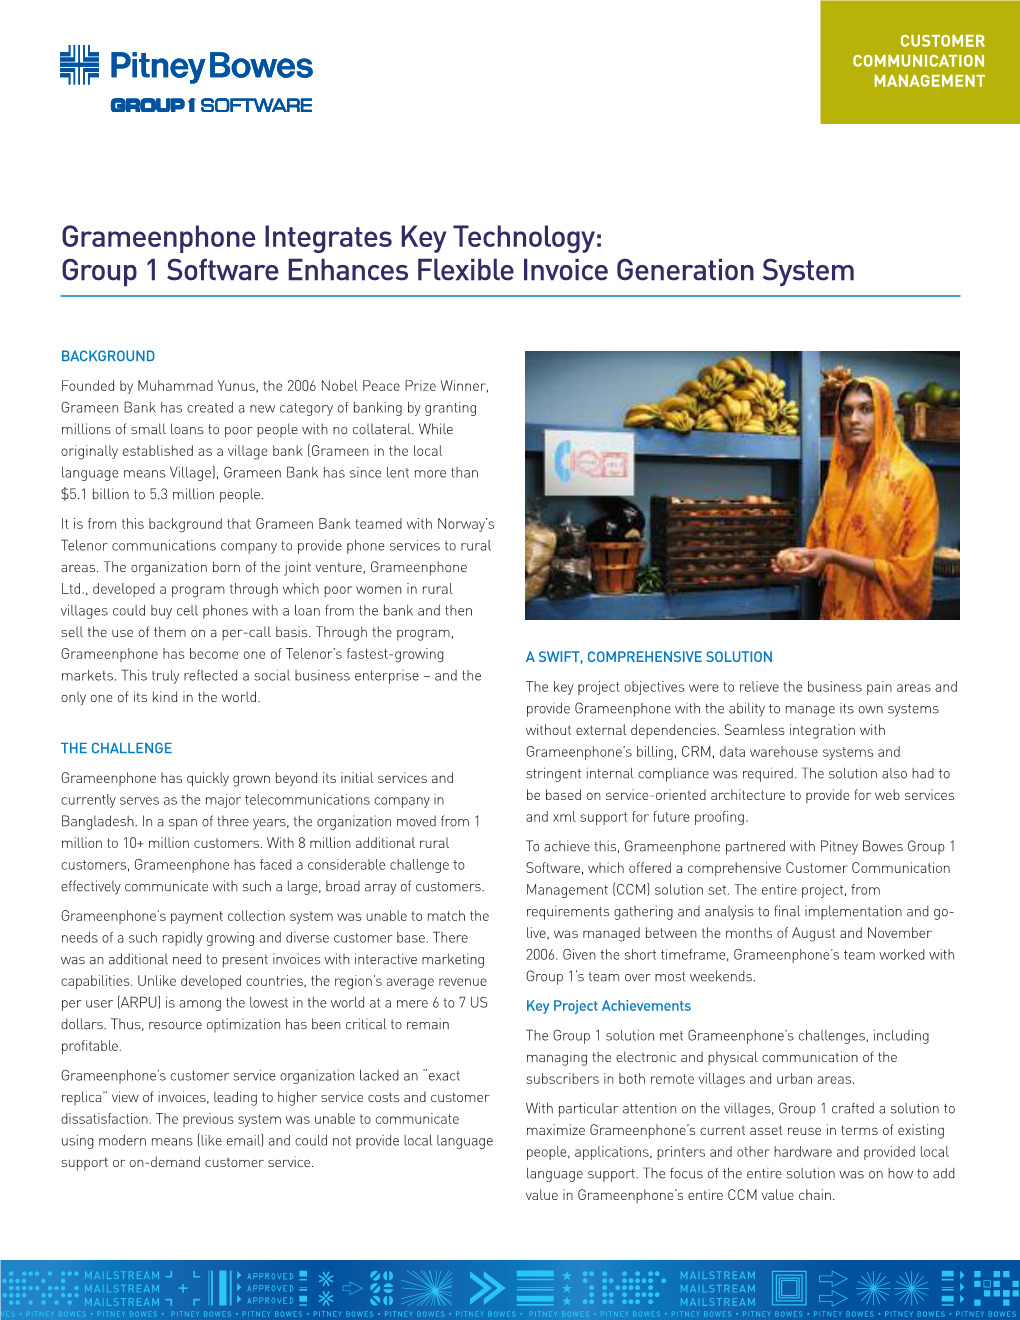 Grameenphone Integrates Key Technology: Group 1 Software Enhances Flexible Invoice Generation System